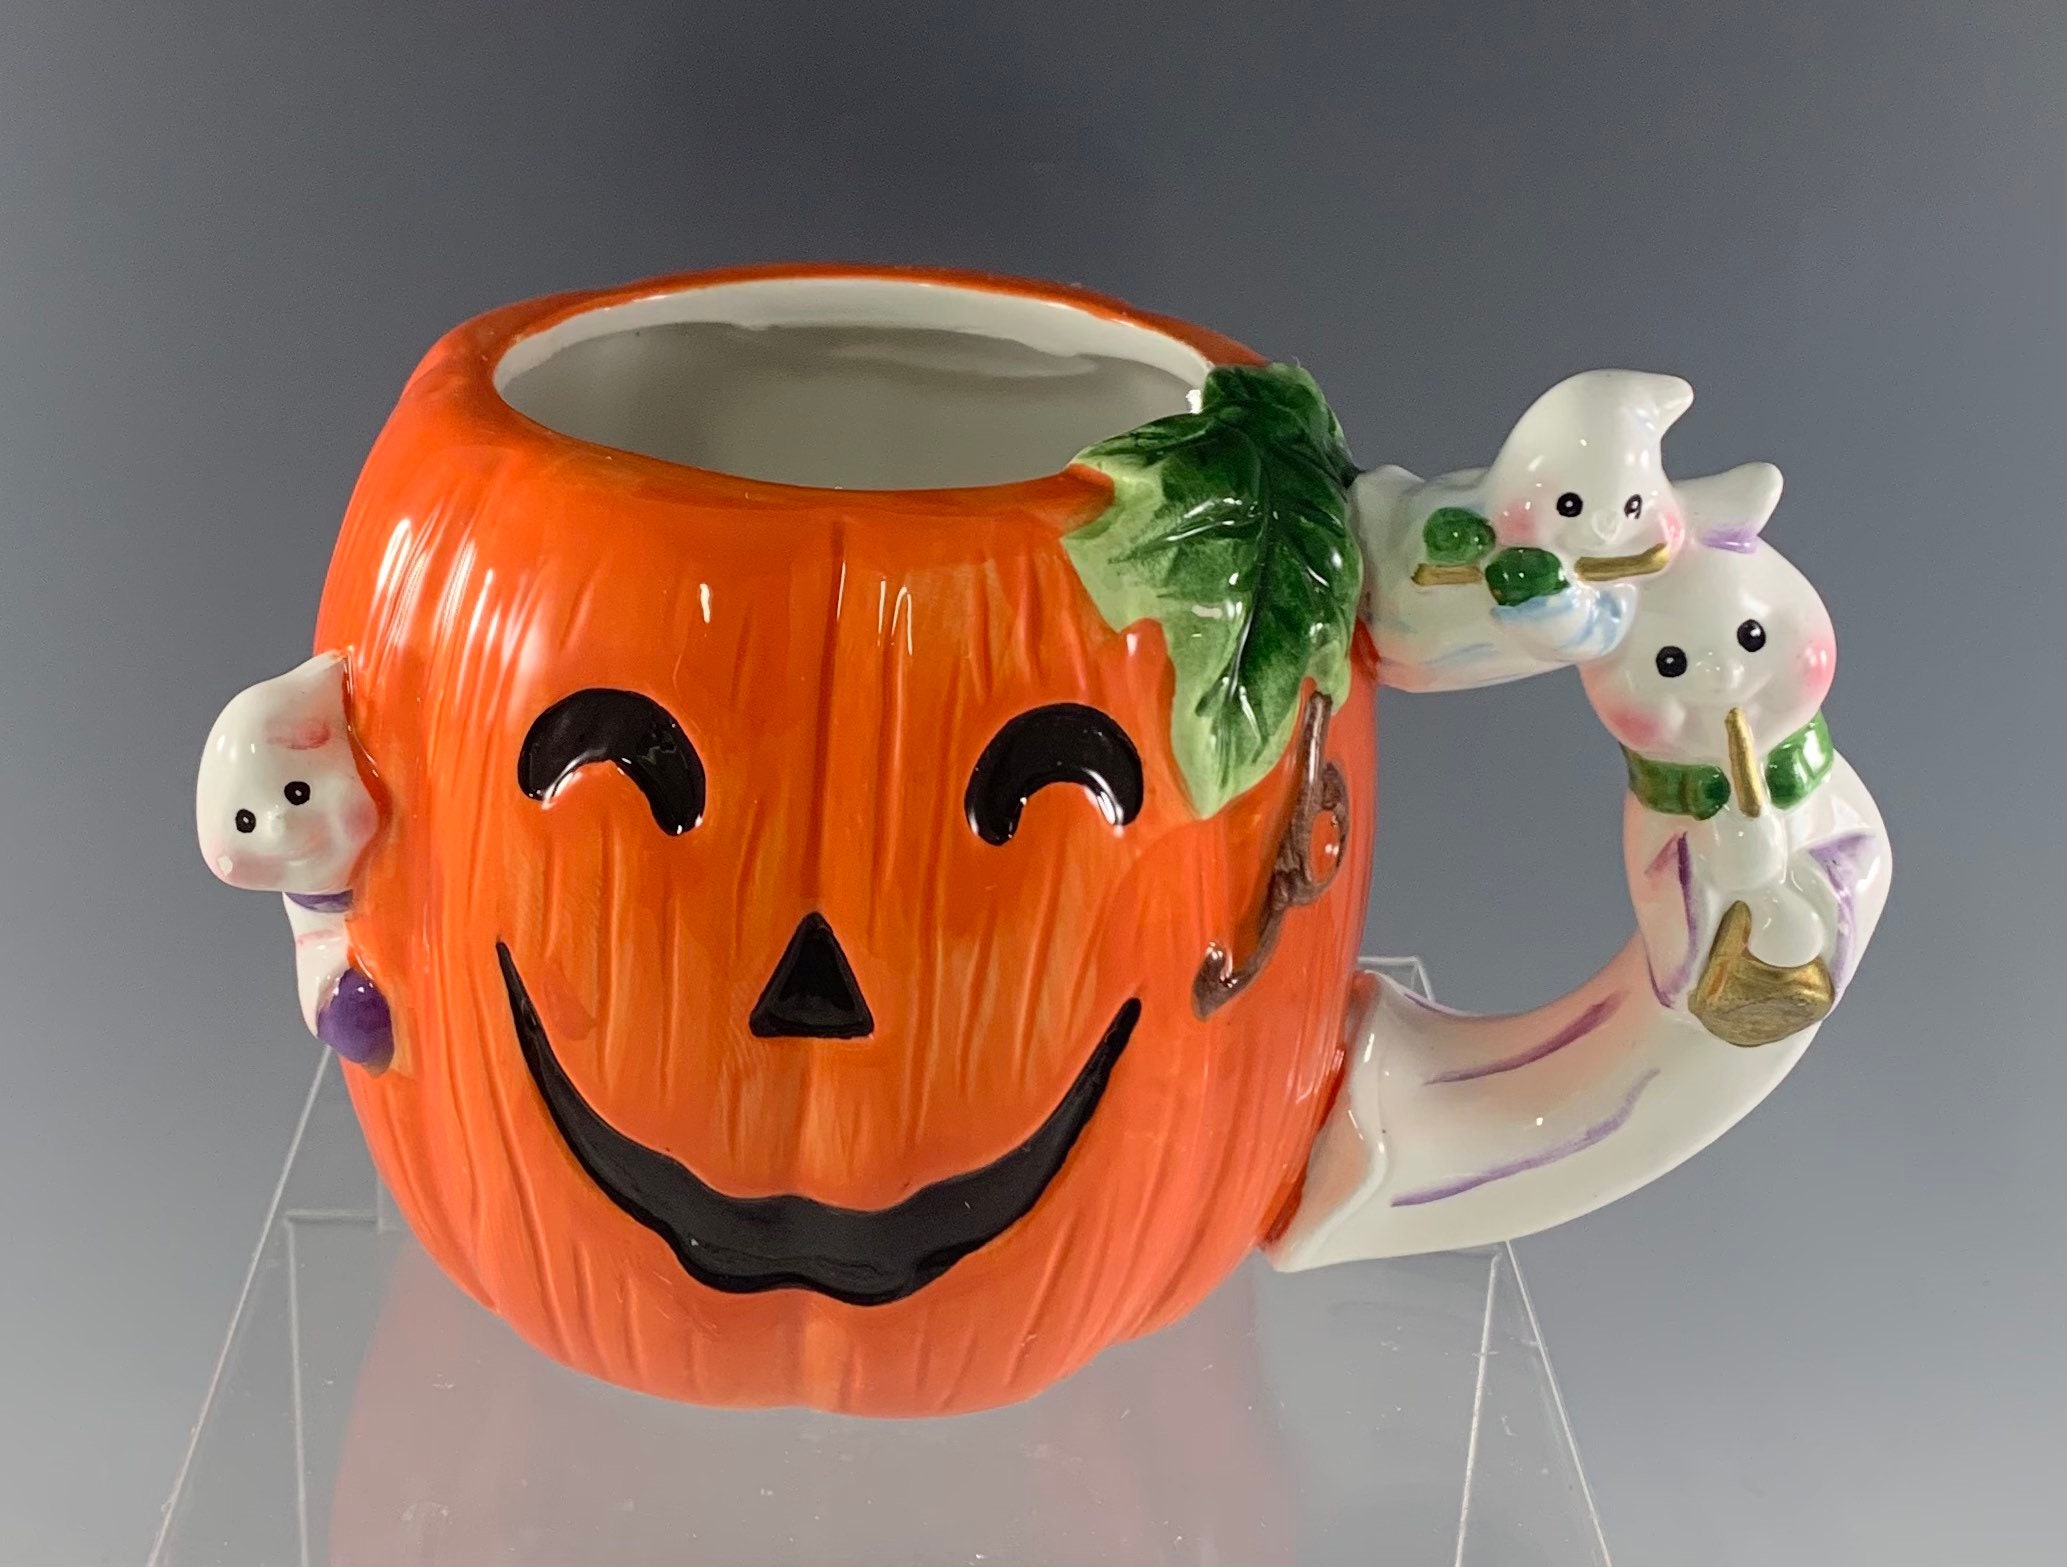 Cambridge Jack-o-Lantern Insulated Coffee Mug, 20 oz